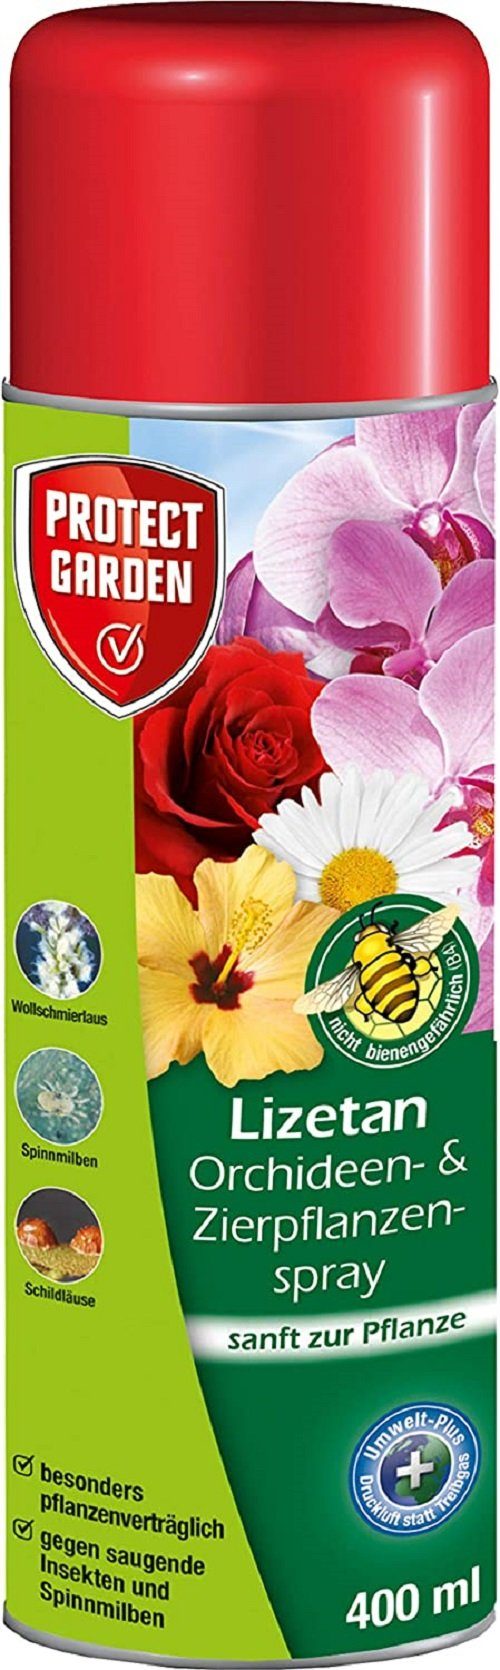 Insektenvernichtungsmittel 400ml & Garden Zierpflanzenspray Lizetan Garden Protect Orchideen- Protect